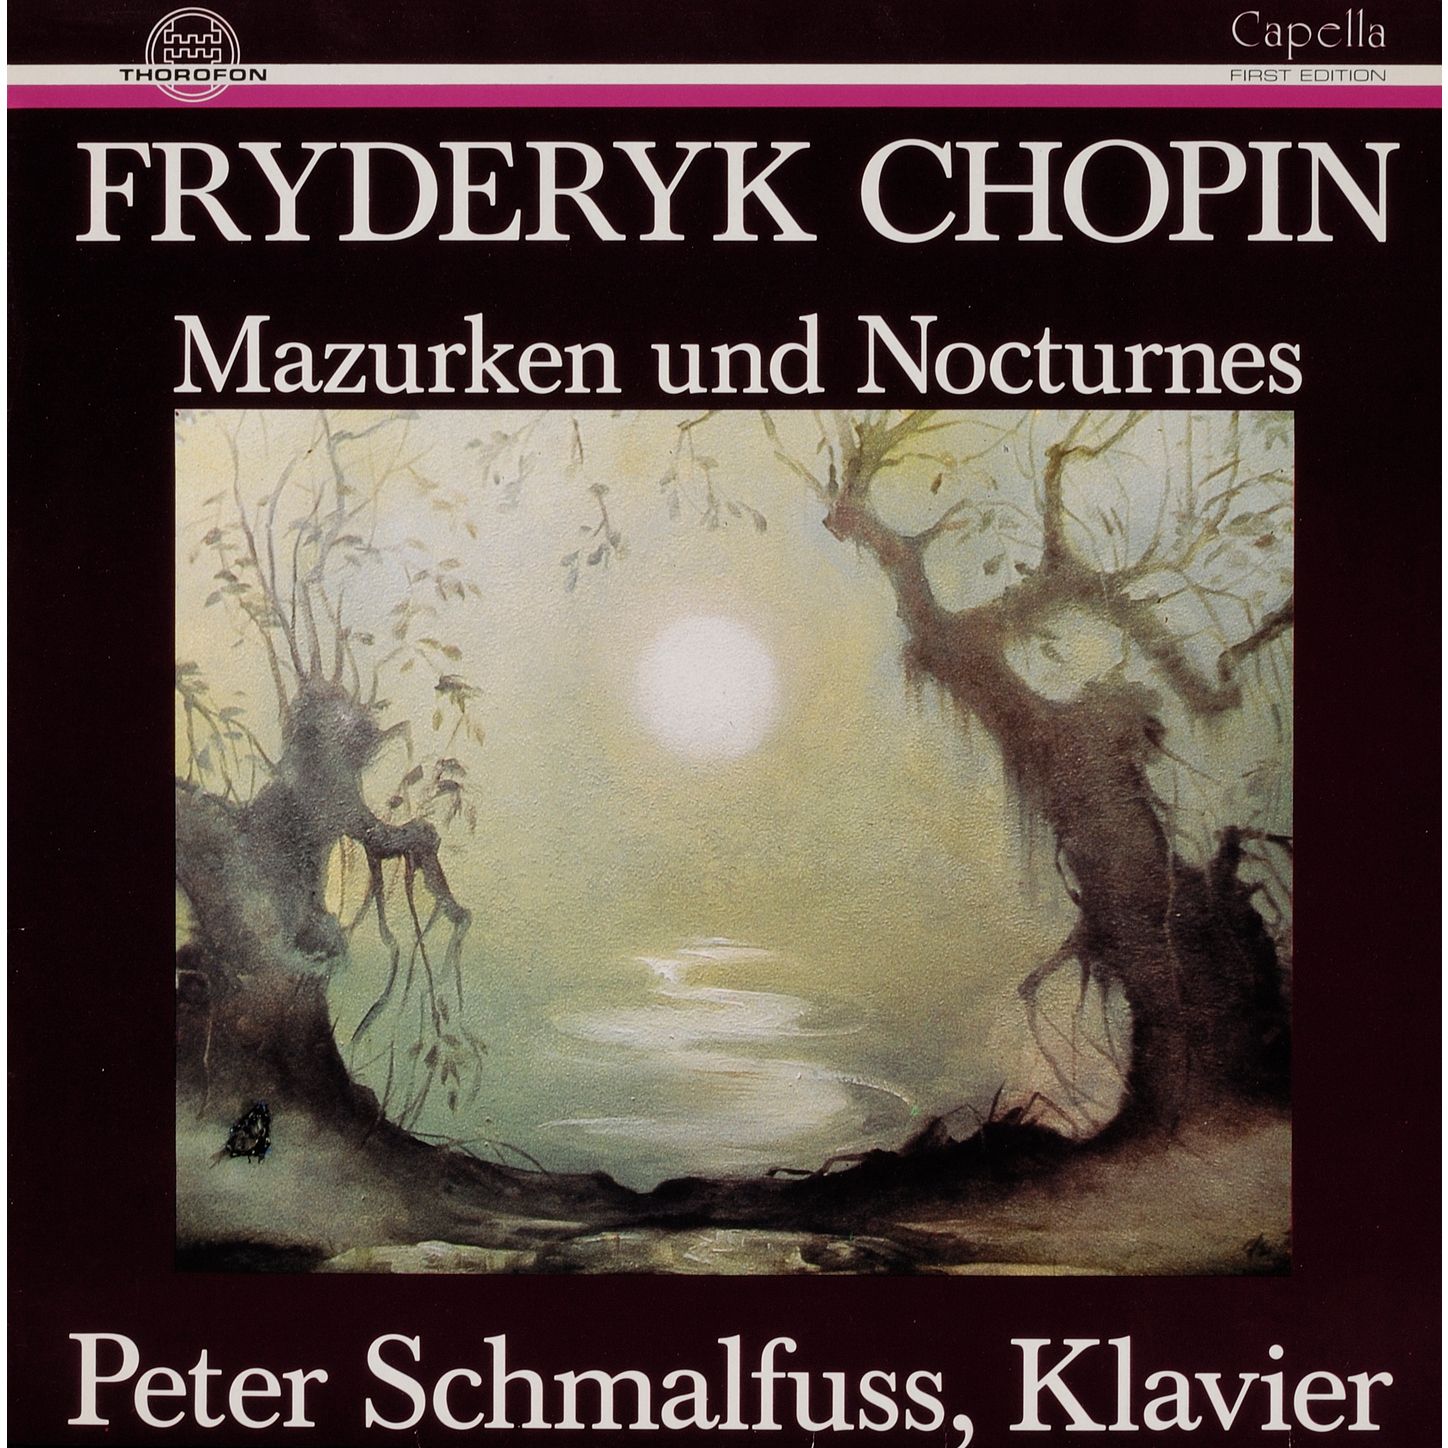 Vier Mazurken fü r Klavier in AFlat Major, Op. 41, No. 4